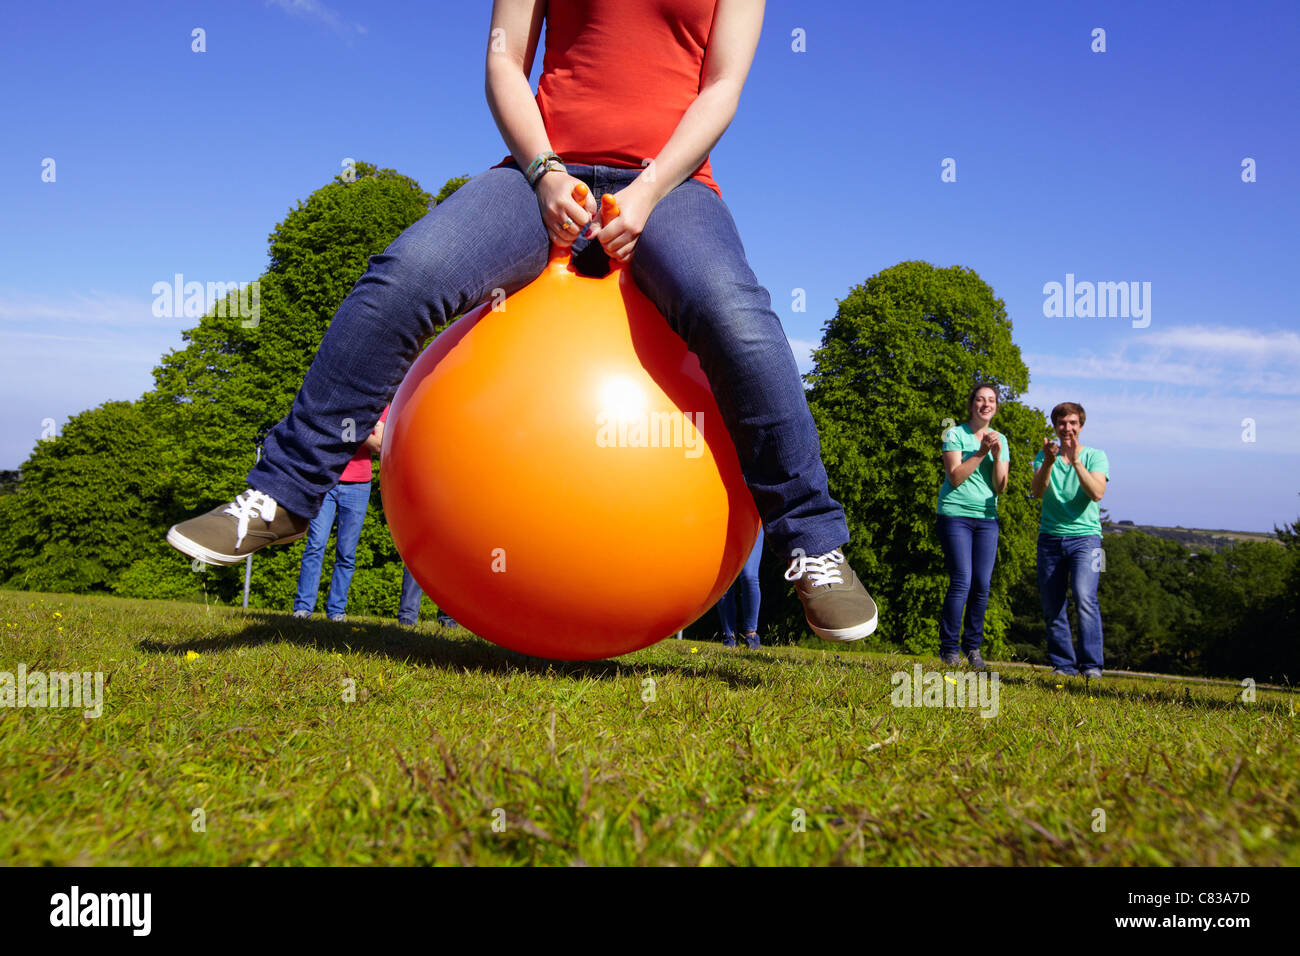 Teams racing on exercises balls Stock Photo